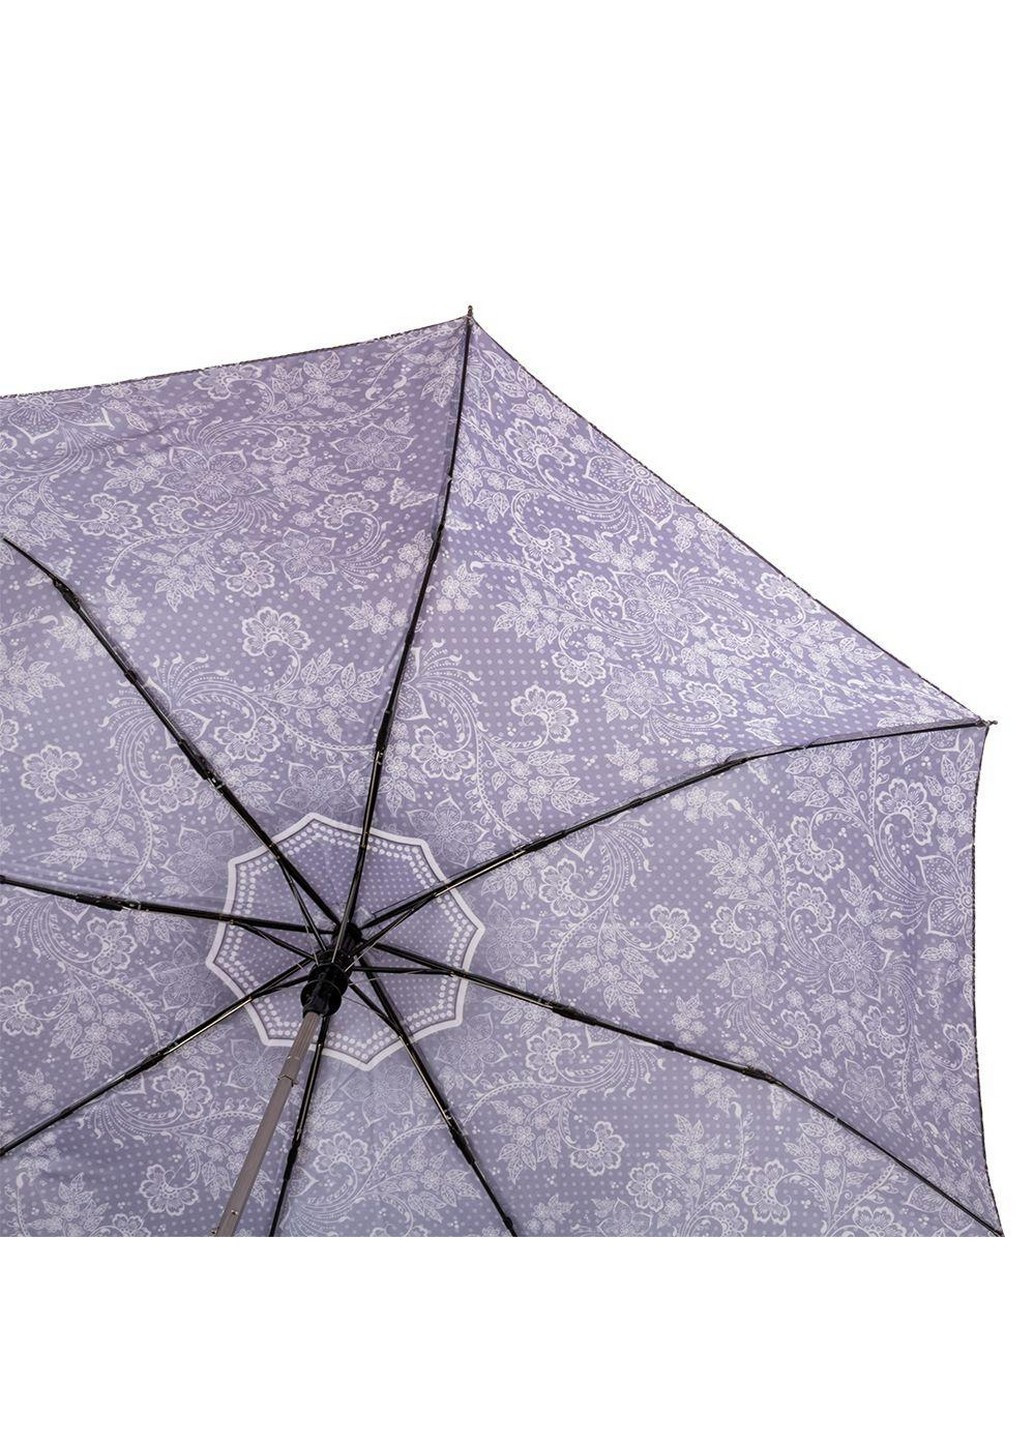 Складаний парасольку напівавтомат жіночий 98 см Ager (207907717)